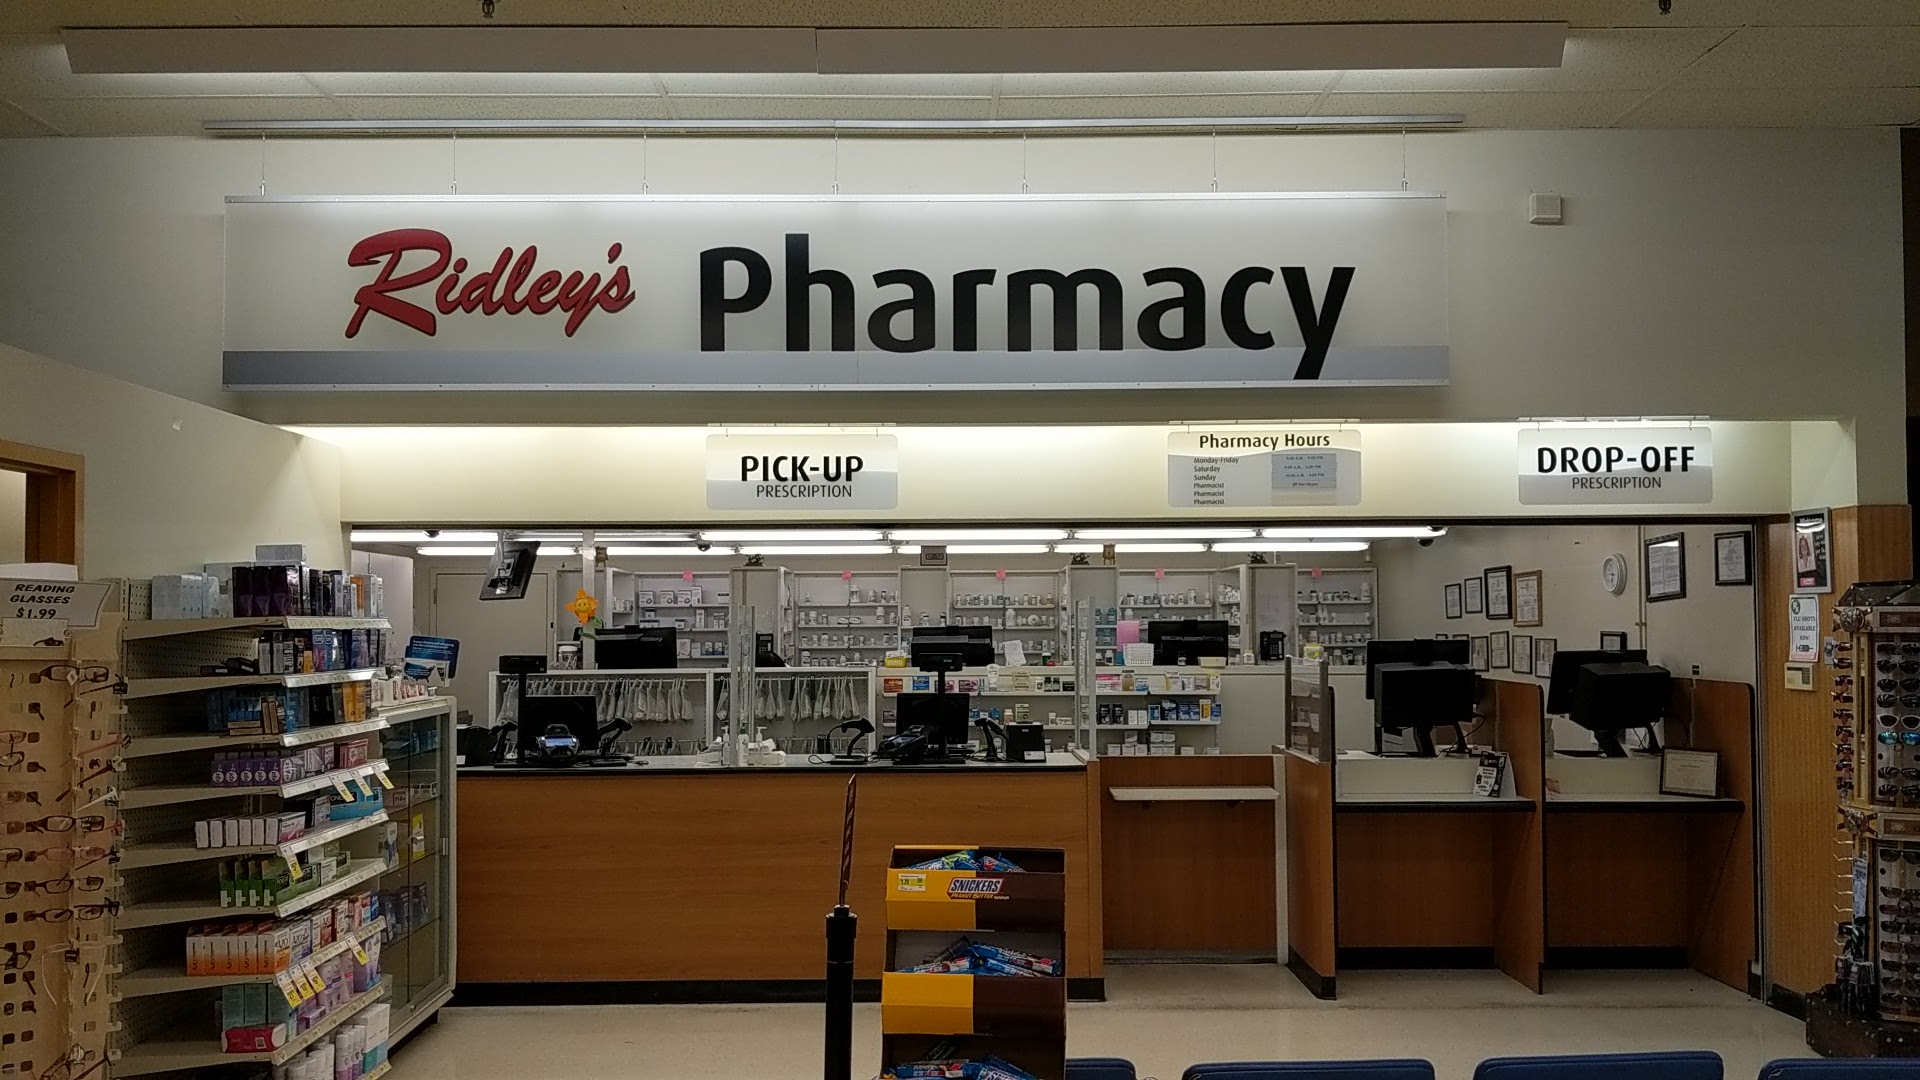 Ridley's Pharmacy